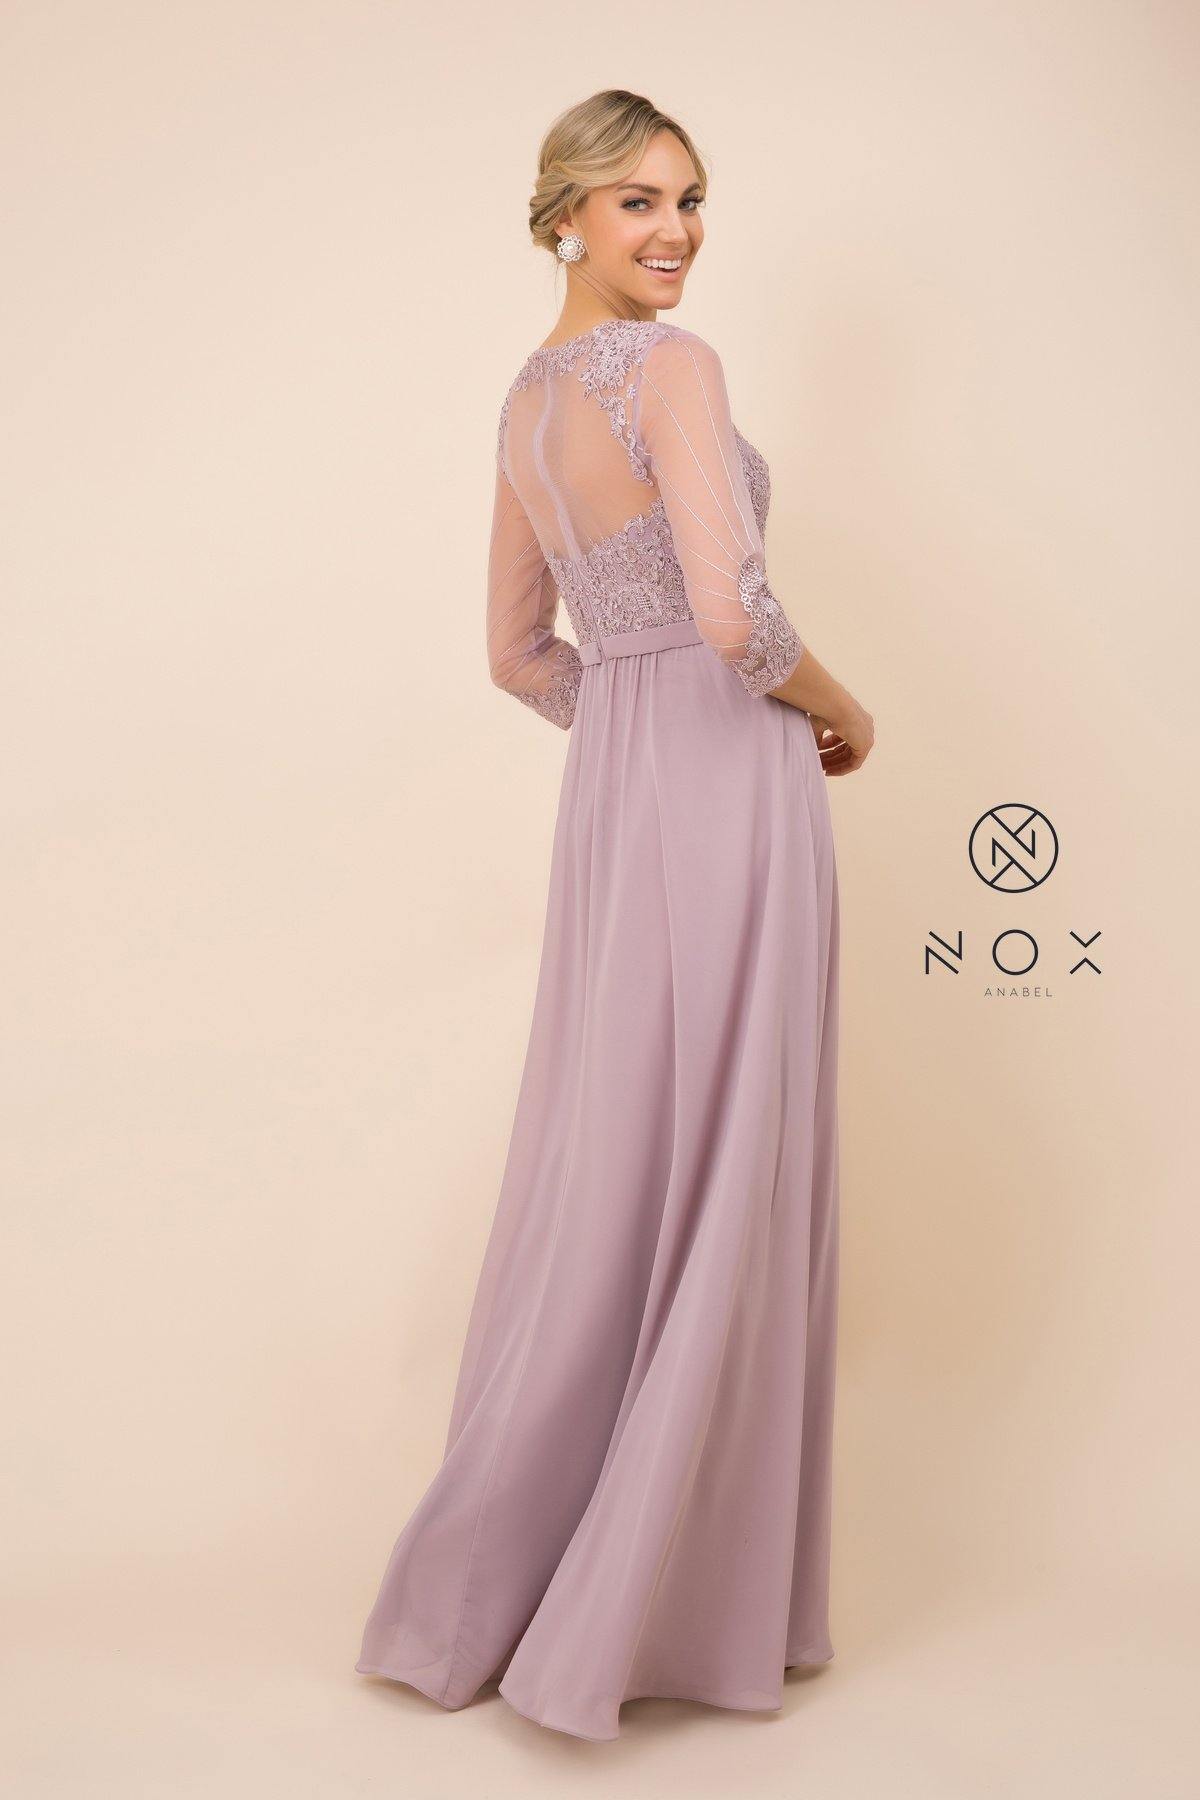 Long Formal Gown Embellished Bodice Dress - The Dress Outlet Nox Anabel